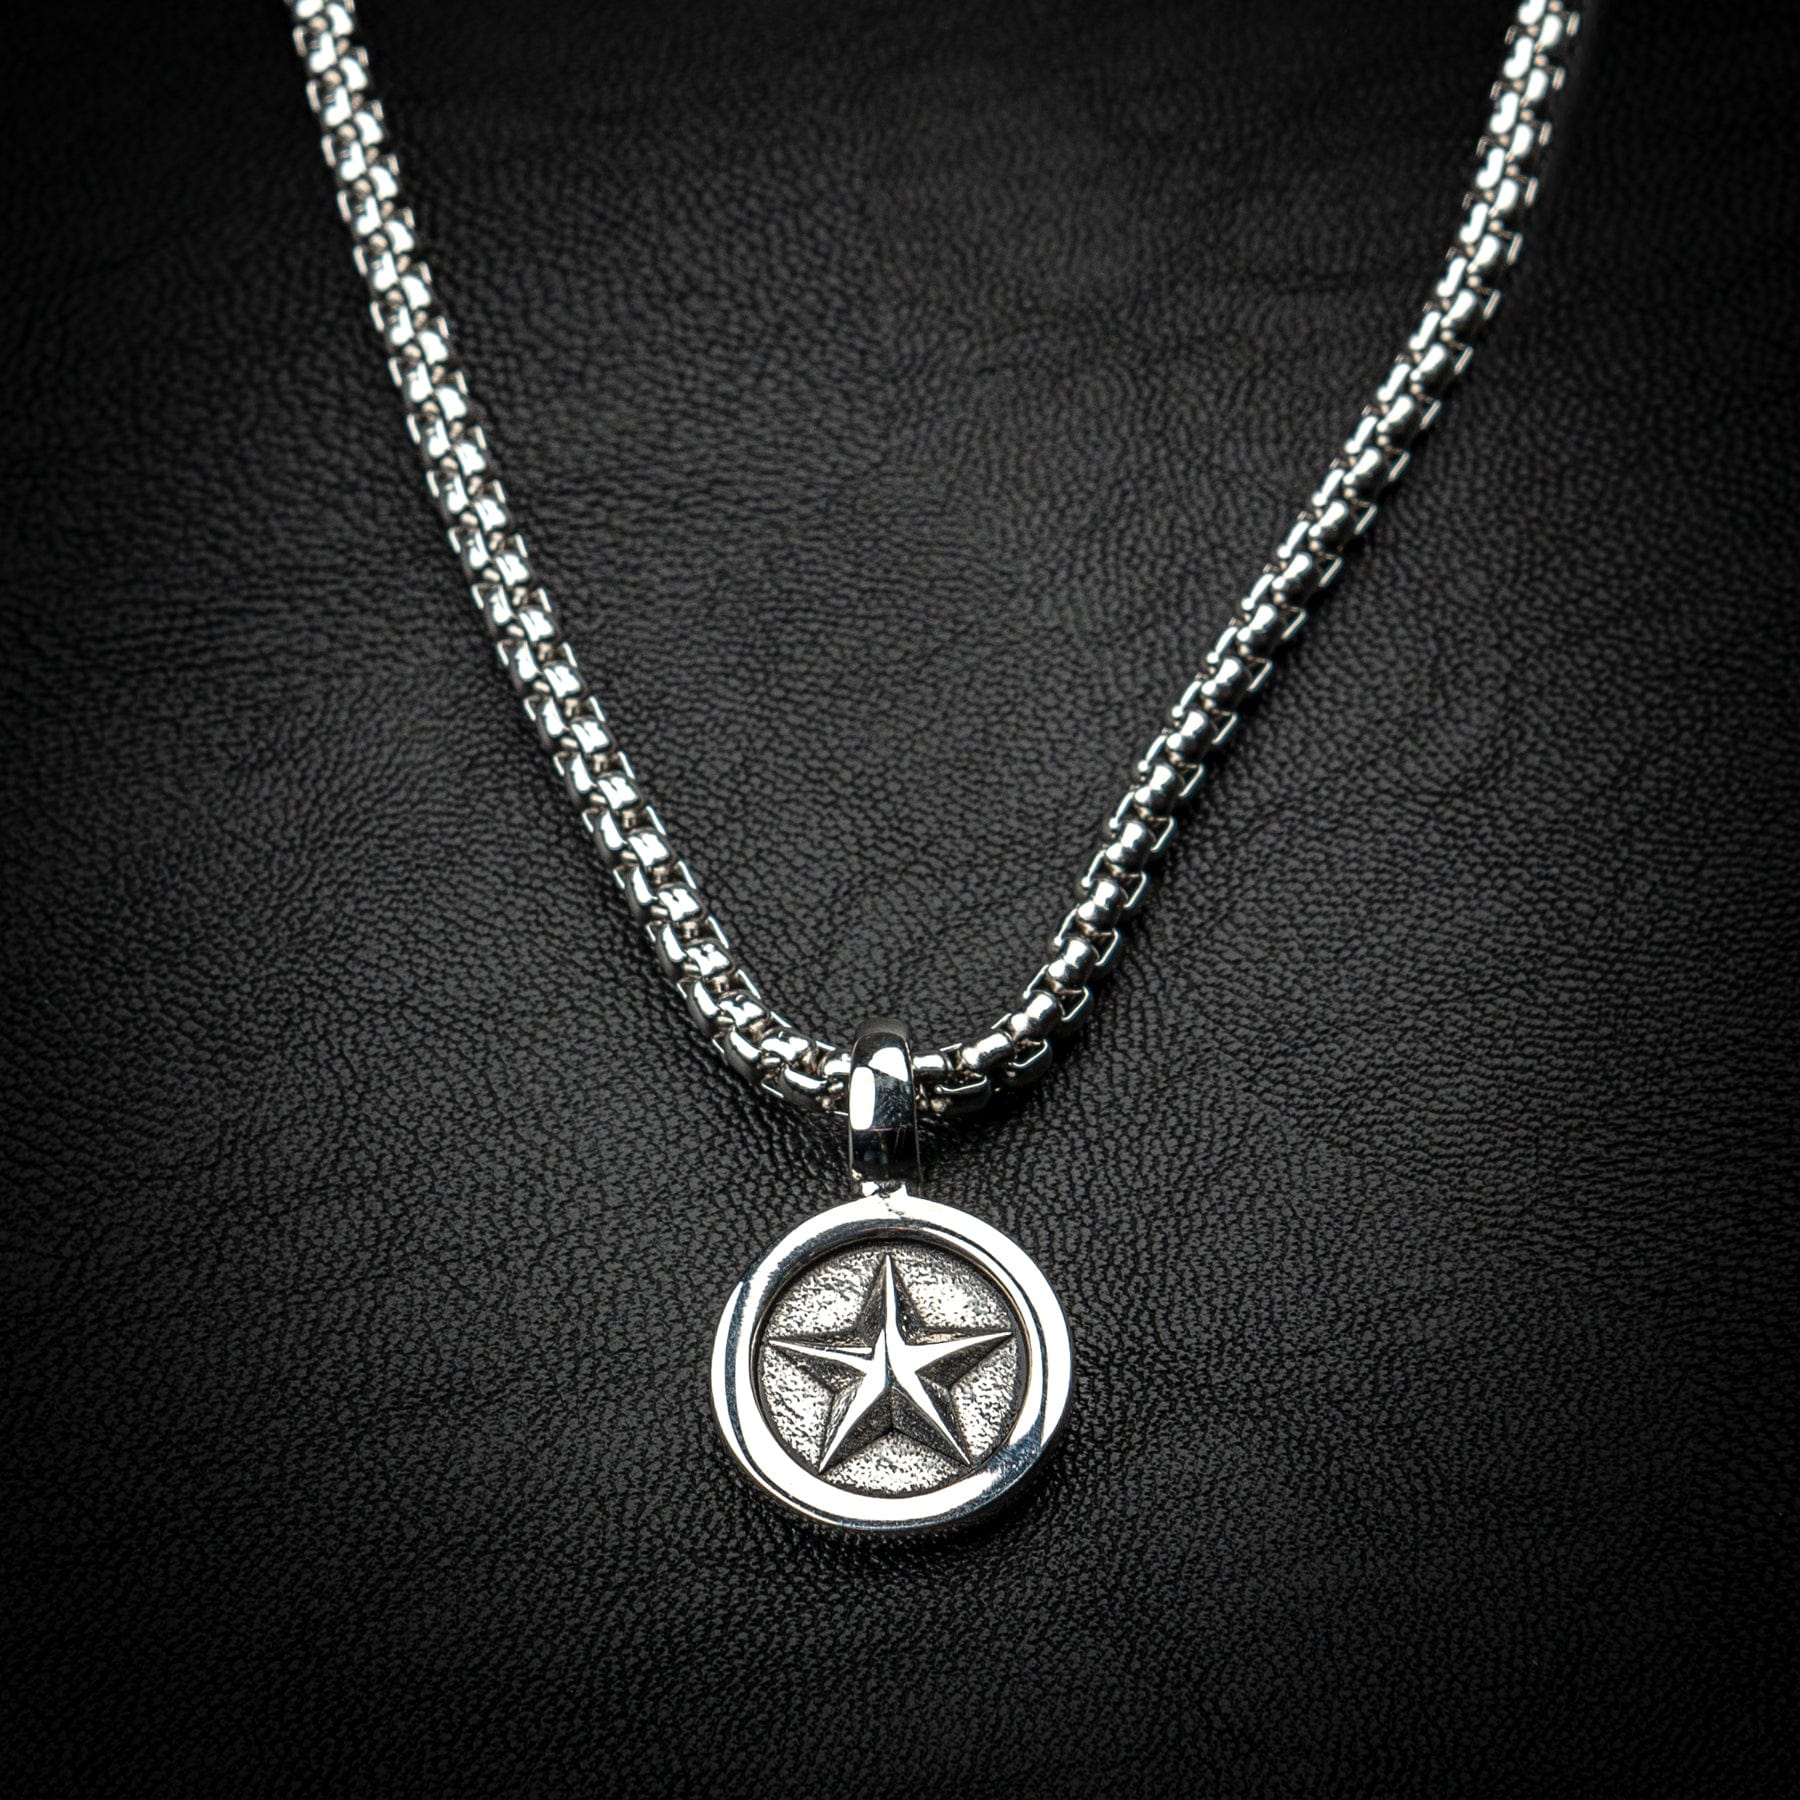 Wornstar Clothing Necklace Star Chain Necklace